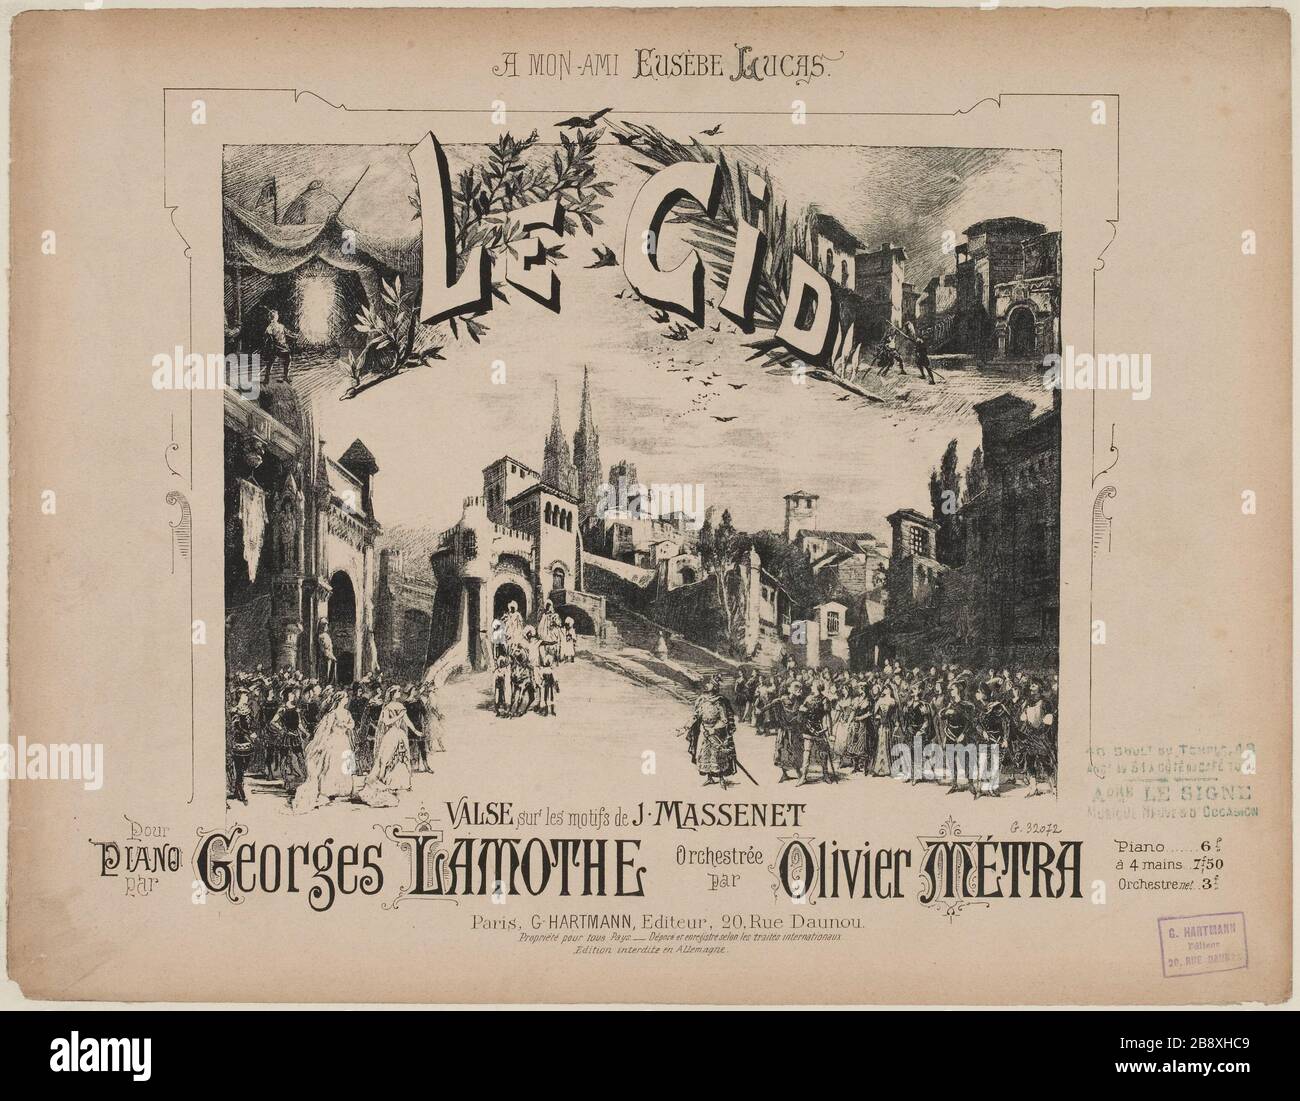 The Cid / Waltz on the Motives of J. Massenet / for Piano von Georges Lamothe orchestriert von Olivier Metra [Coverage] Stockfoto